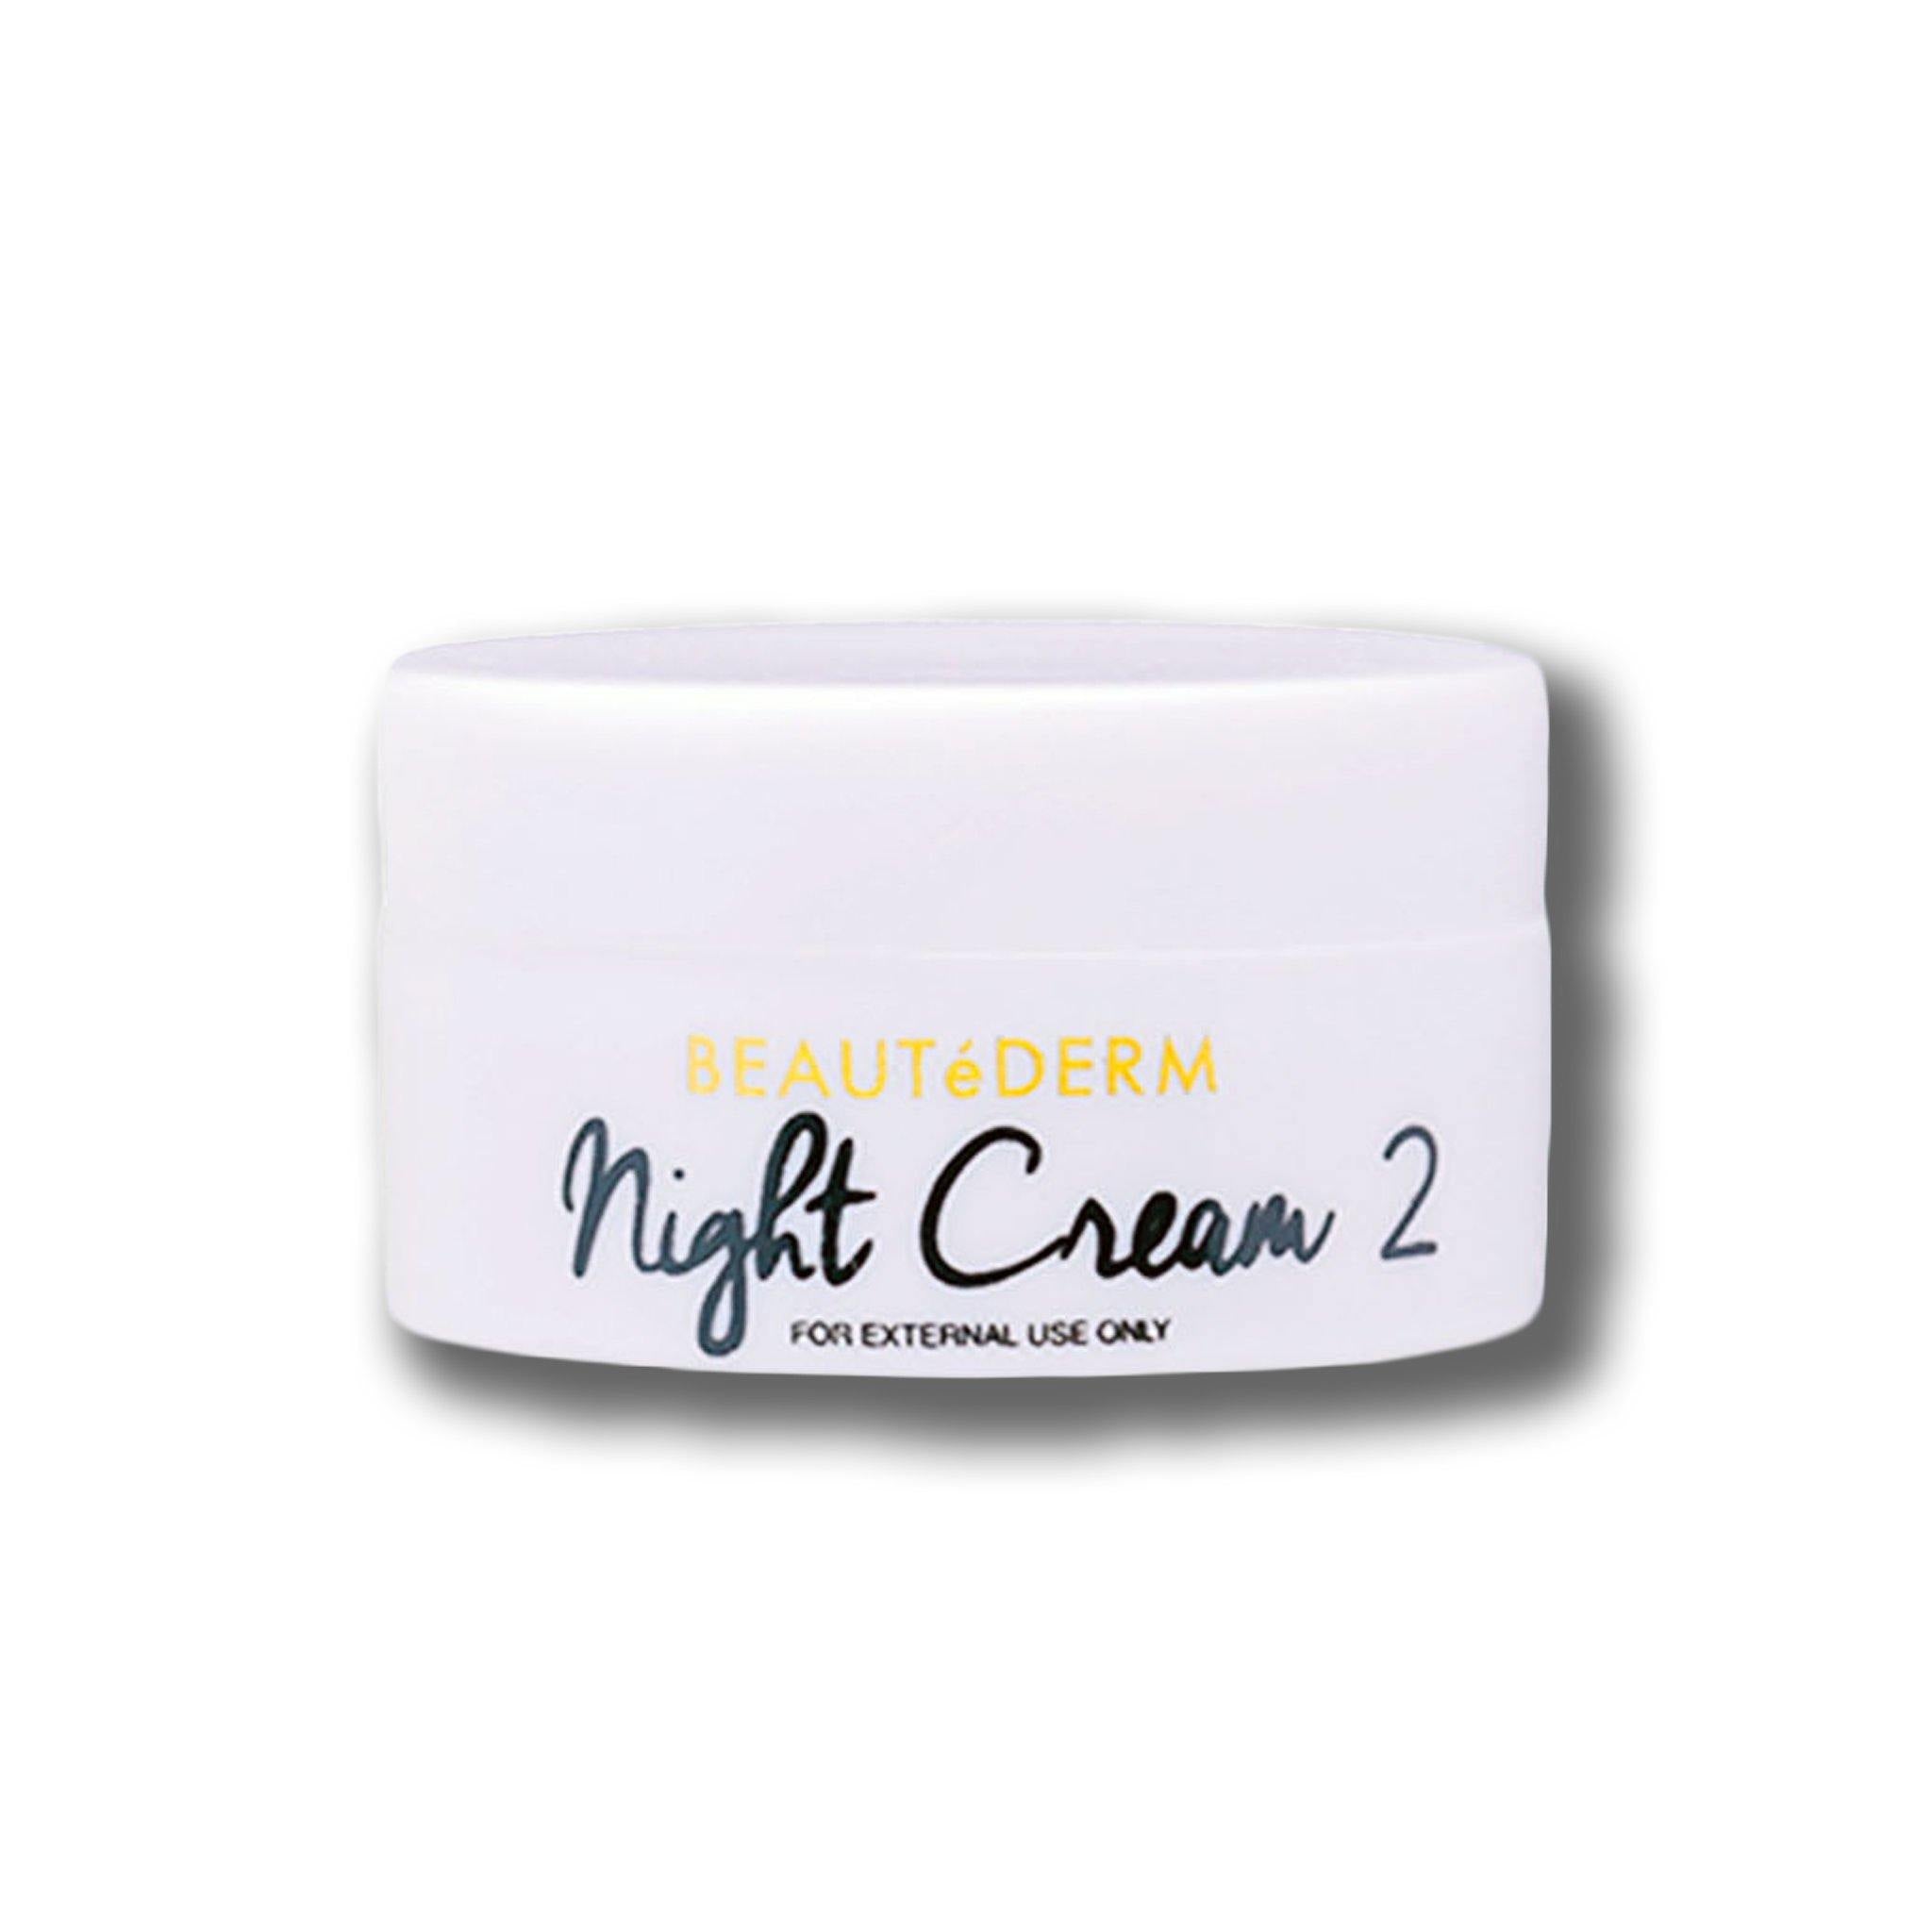 Night Cream 2, Moisturizing, 10g, by Beautederm